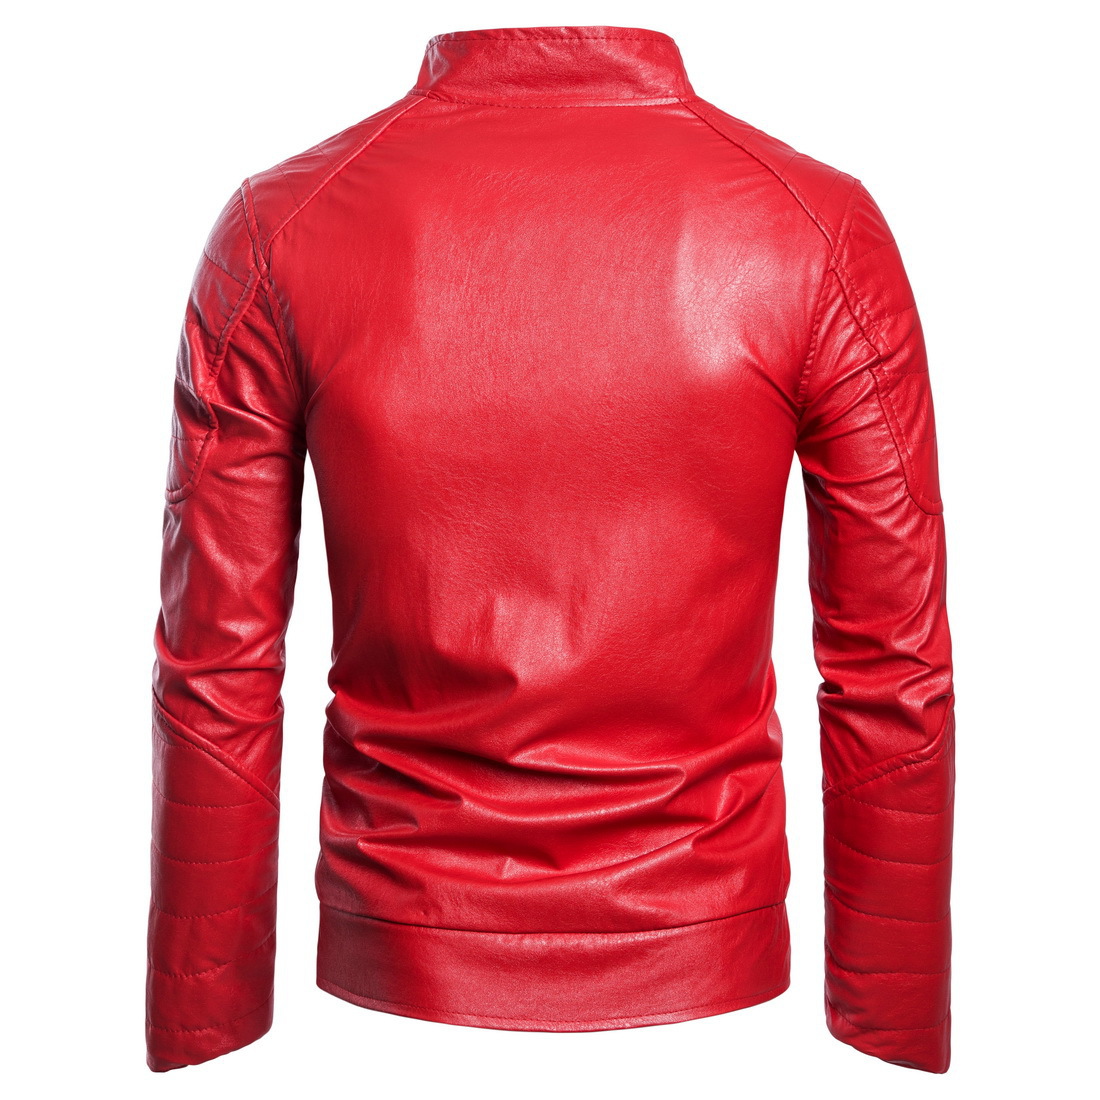 European men's leather coat fall 2019 new fashion punk wise European foreign trade coat